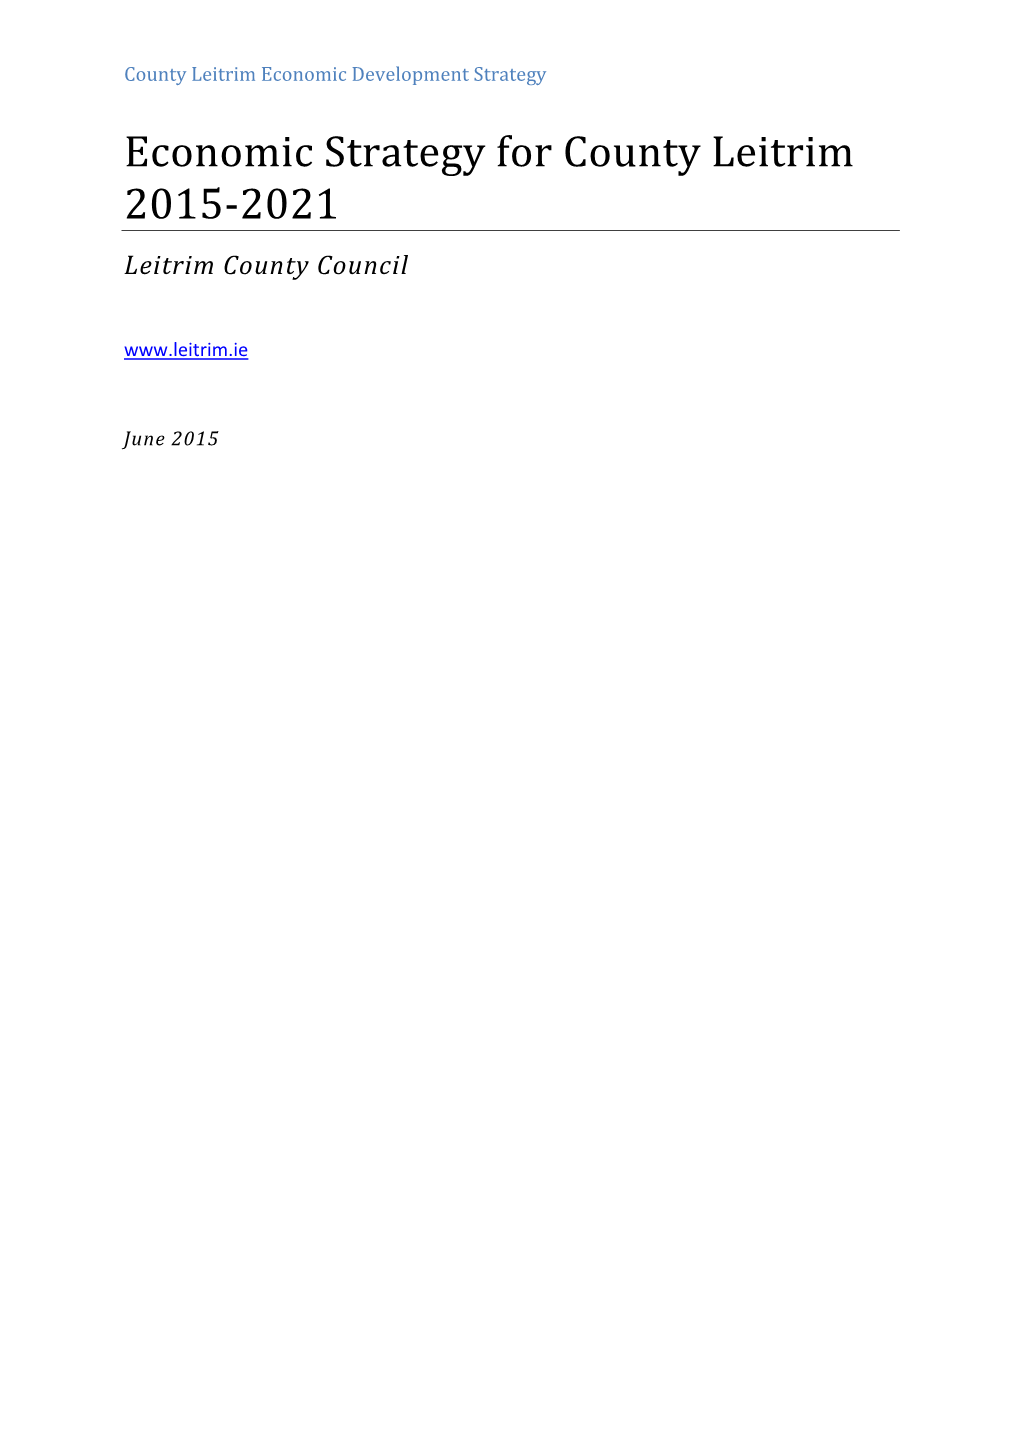 Economic Strategy for County Leitrim 2015-2021 Leitrim County Council